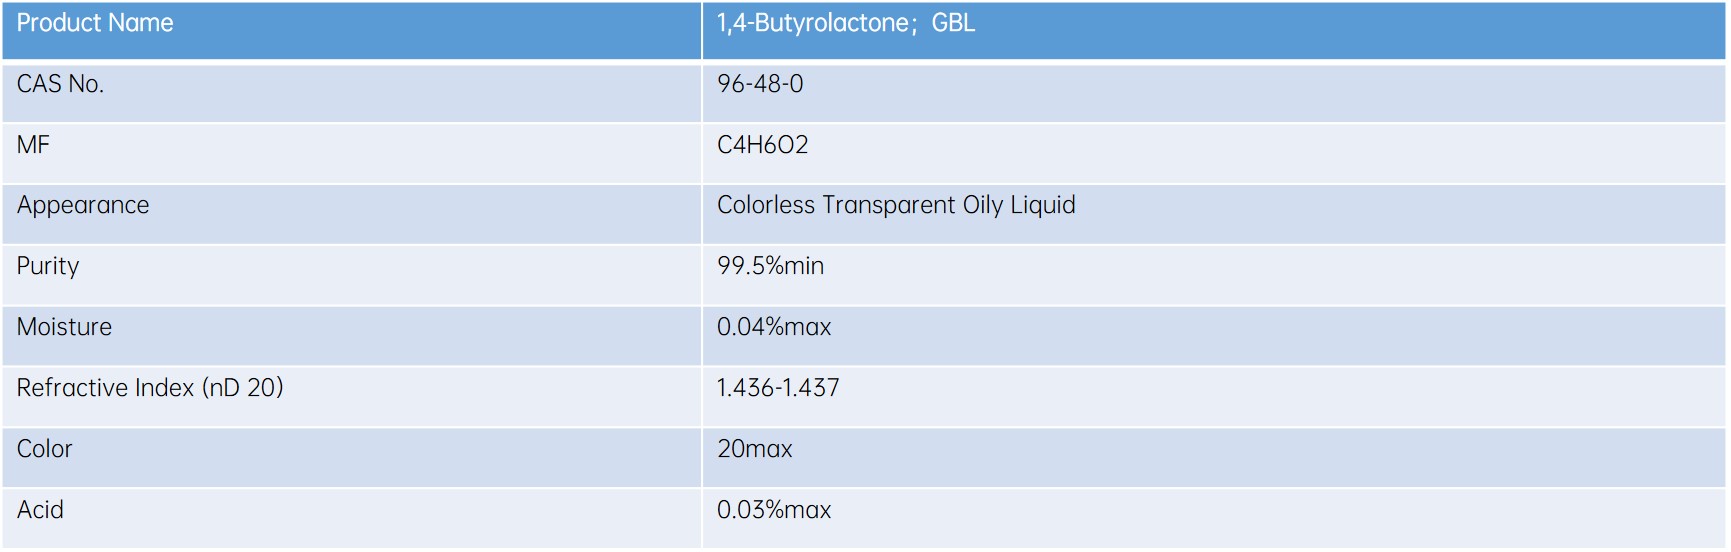 1,4-Butyrolactone (GBL)